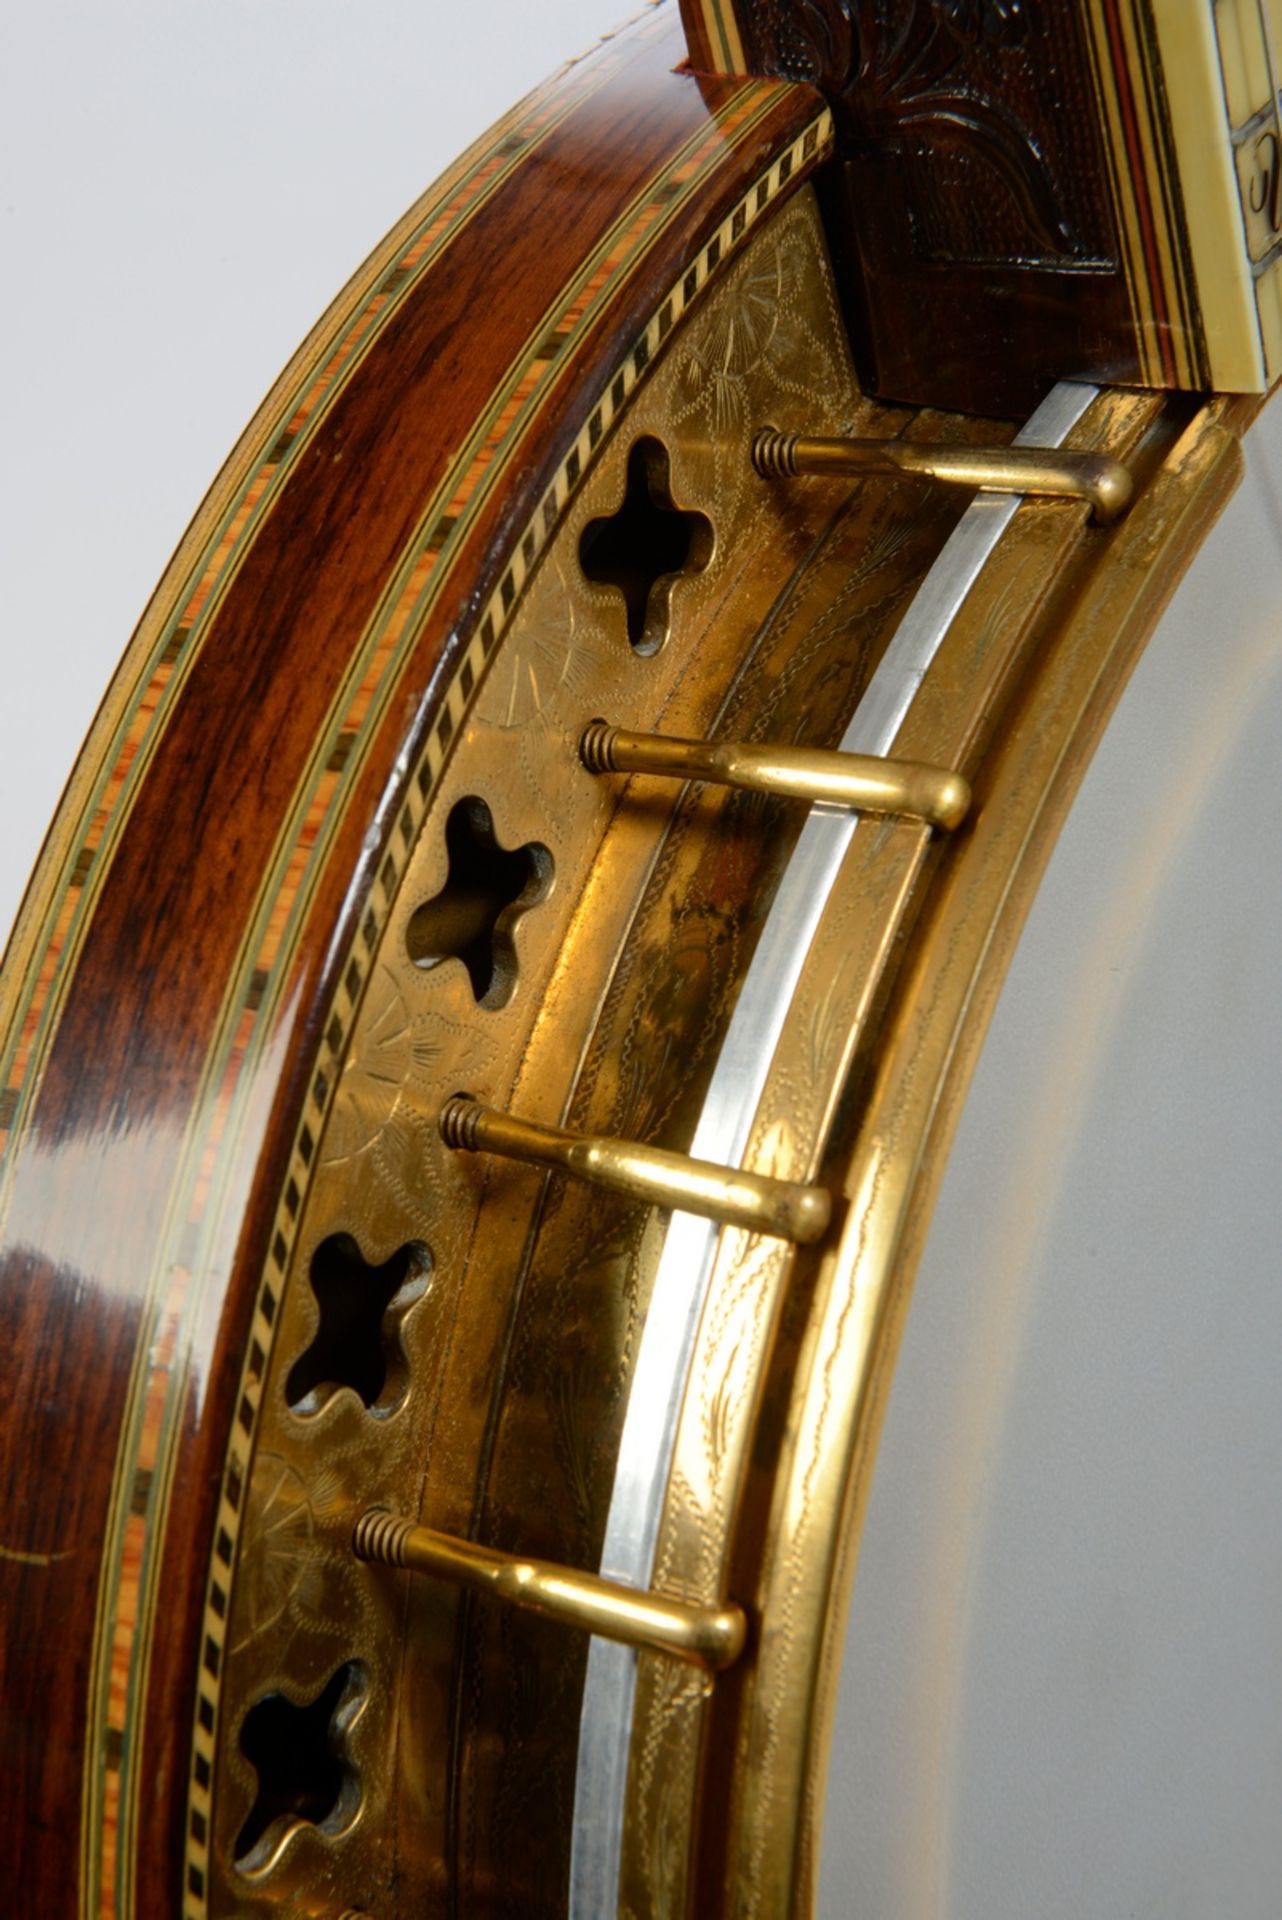 Tenor Banjo, Epiphone Banjo Company, House of Strathopoulo Inc. New York, model Recording Art Conce - Image 11 of 24